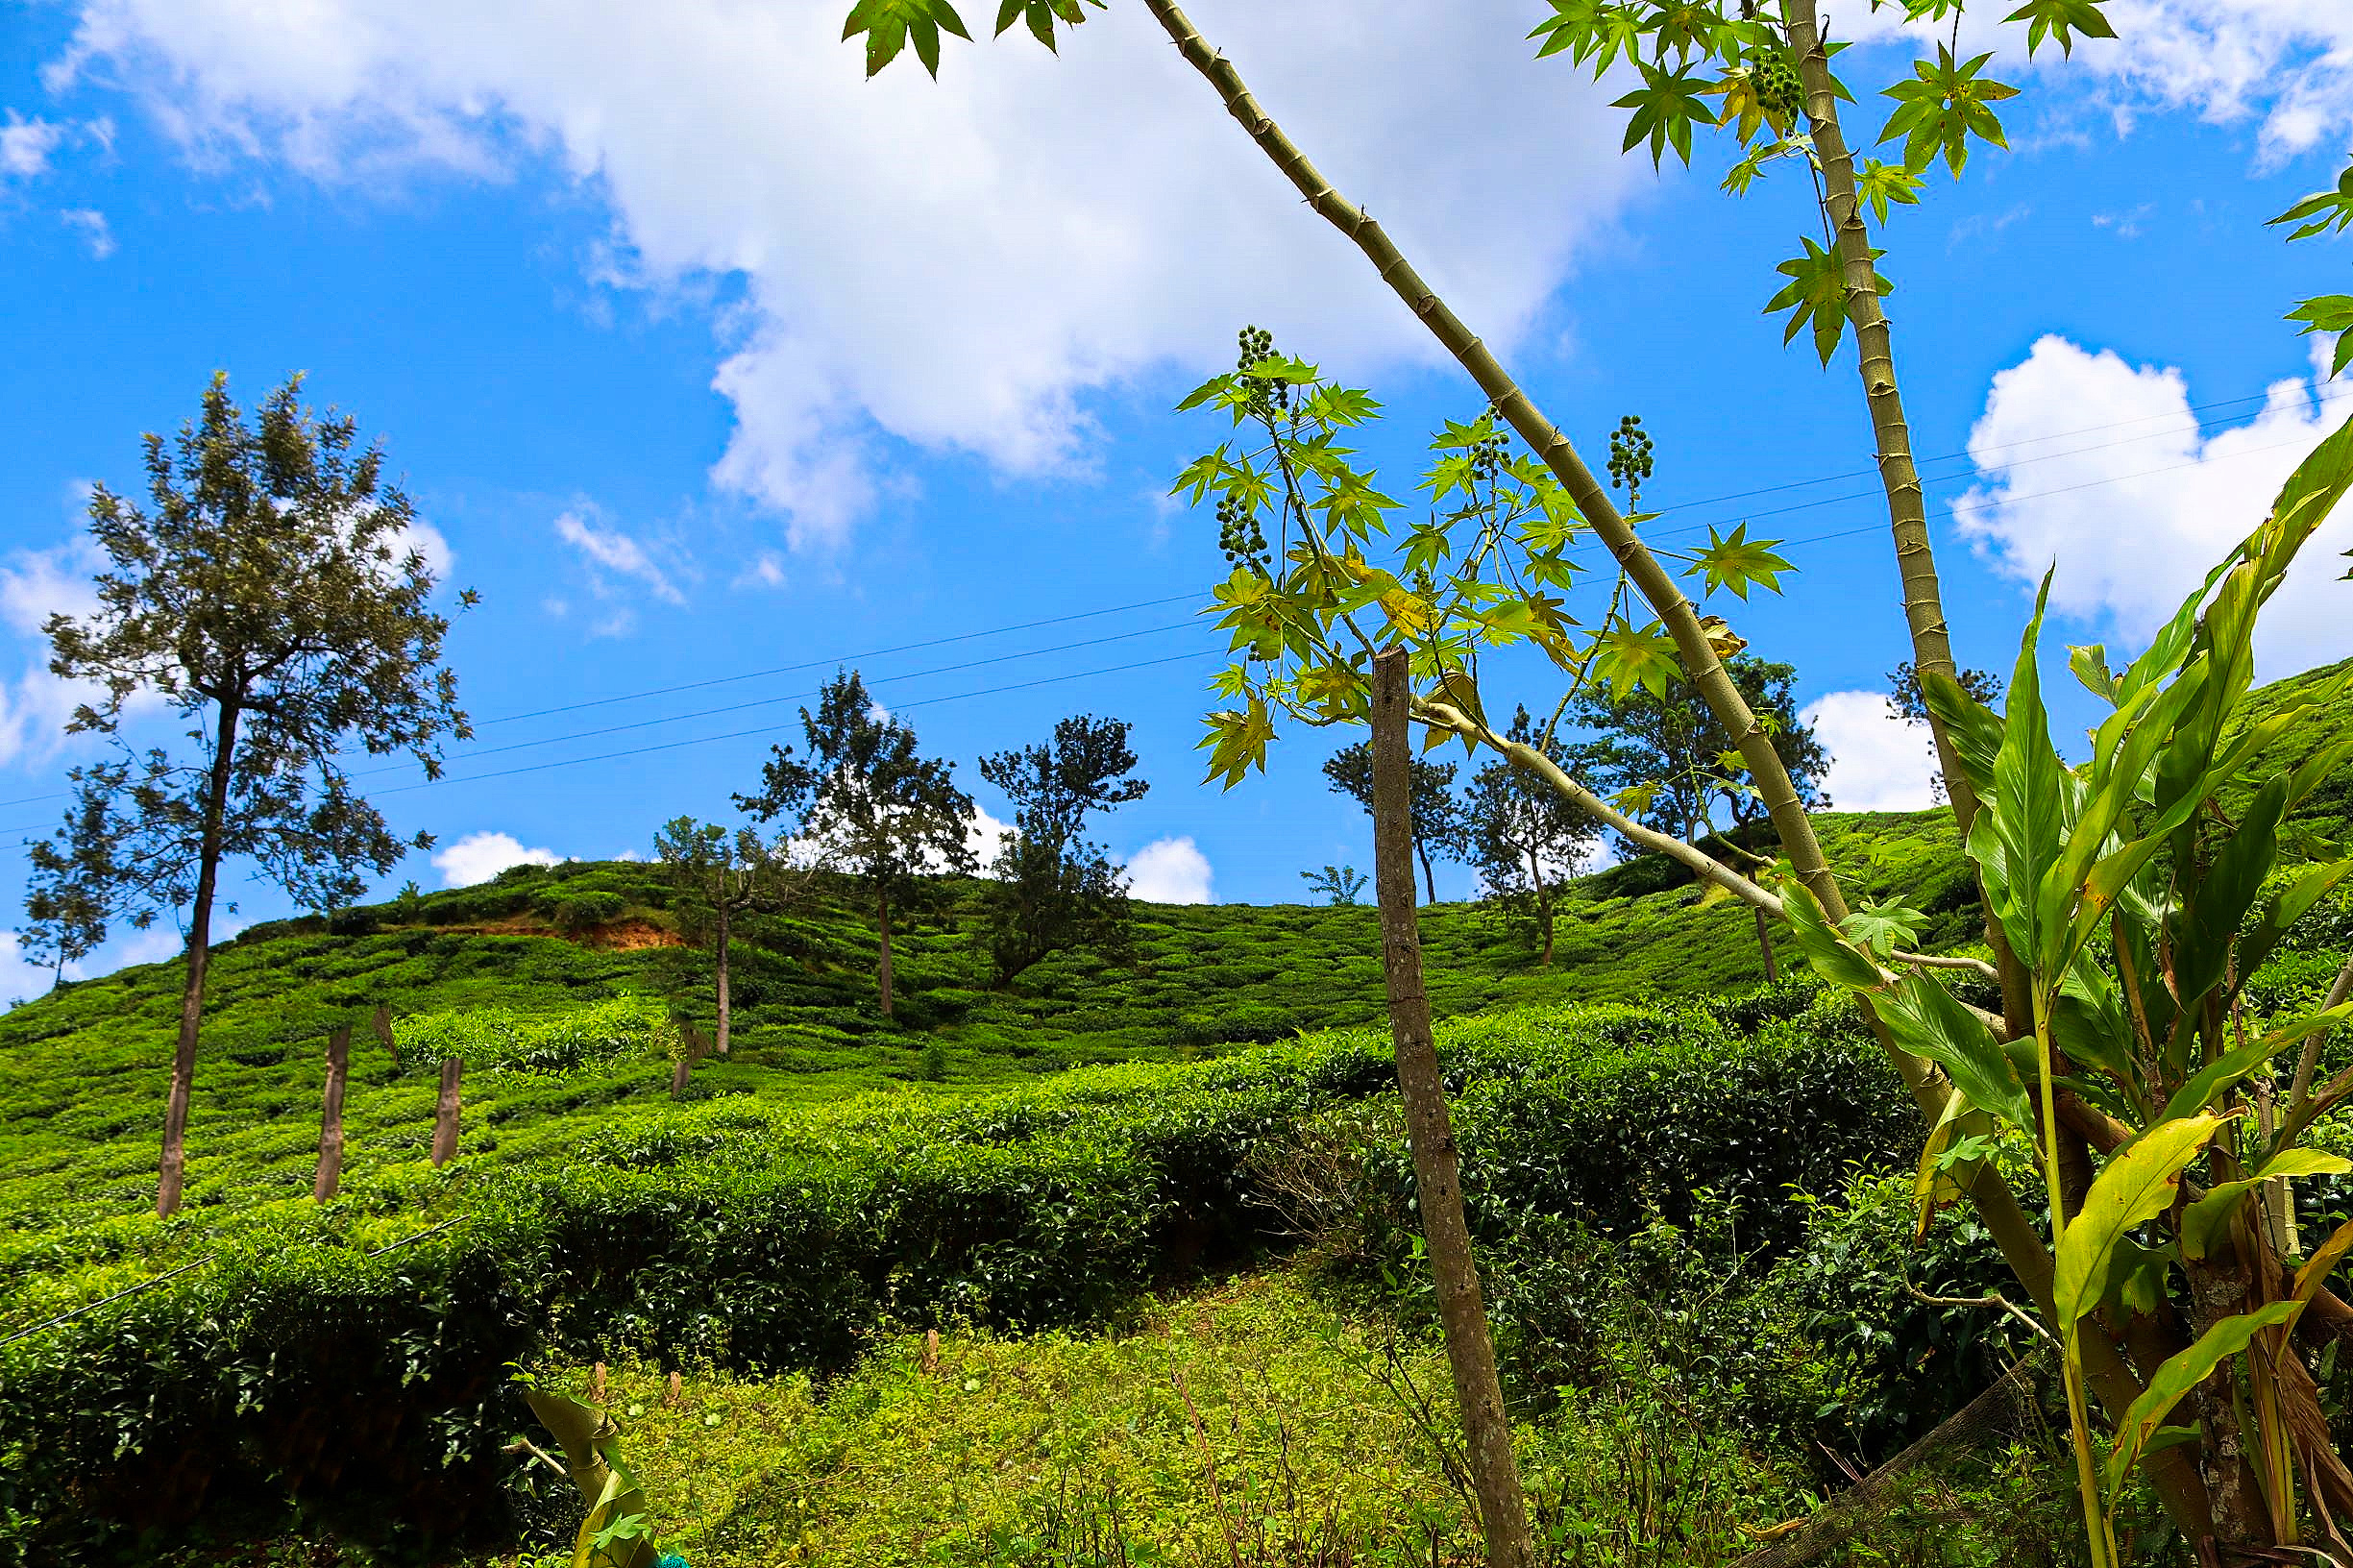 Tea plantation in an area